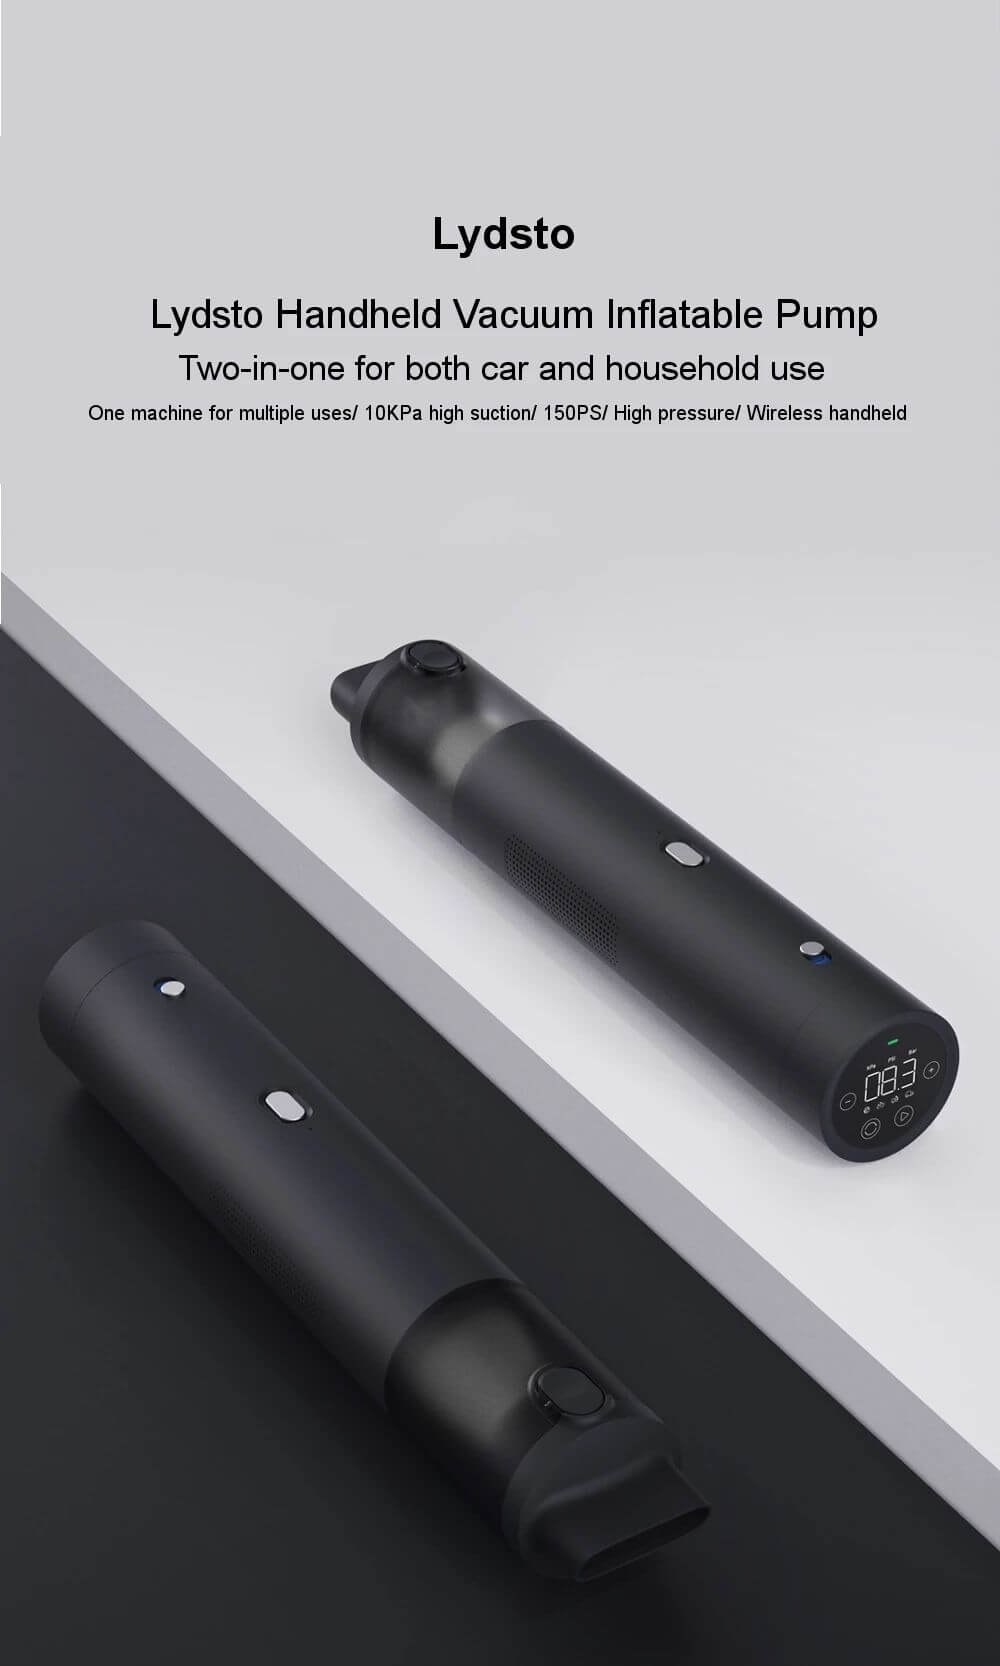 جارو شارژی دوکاره شیائومی Lydsto‏ - Xiaomi Lydsto 2 in 1 hand vacuum cleaner